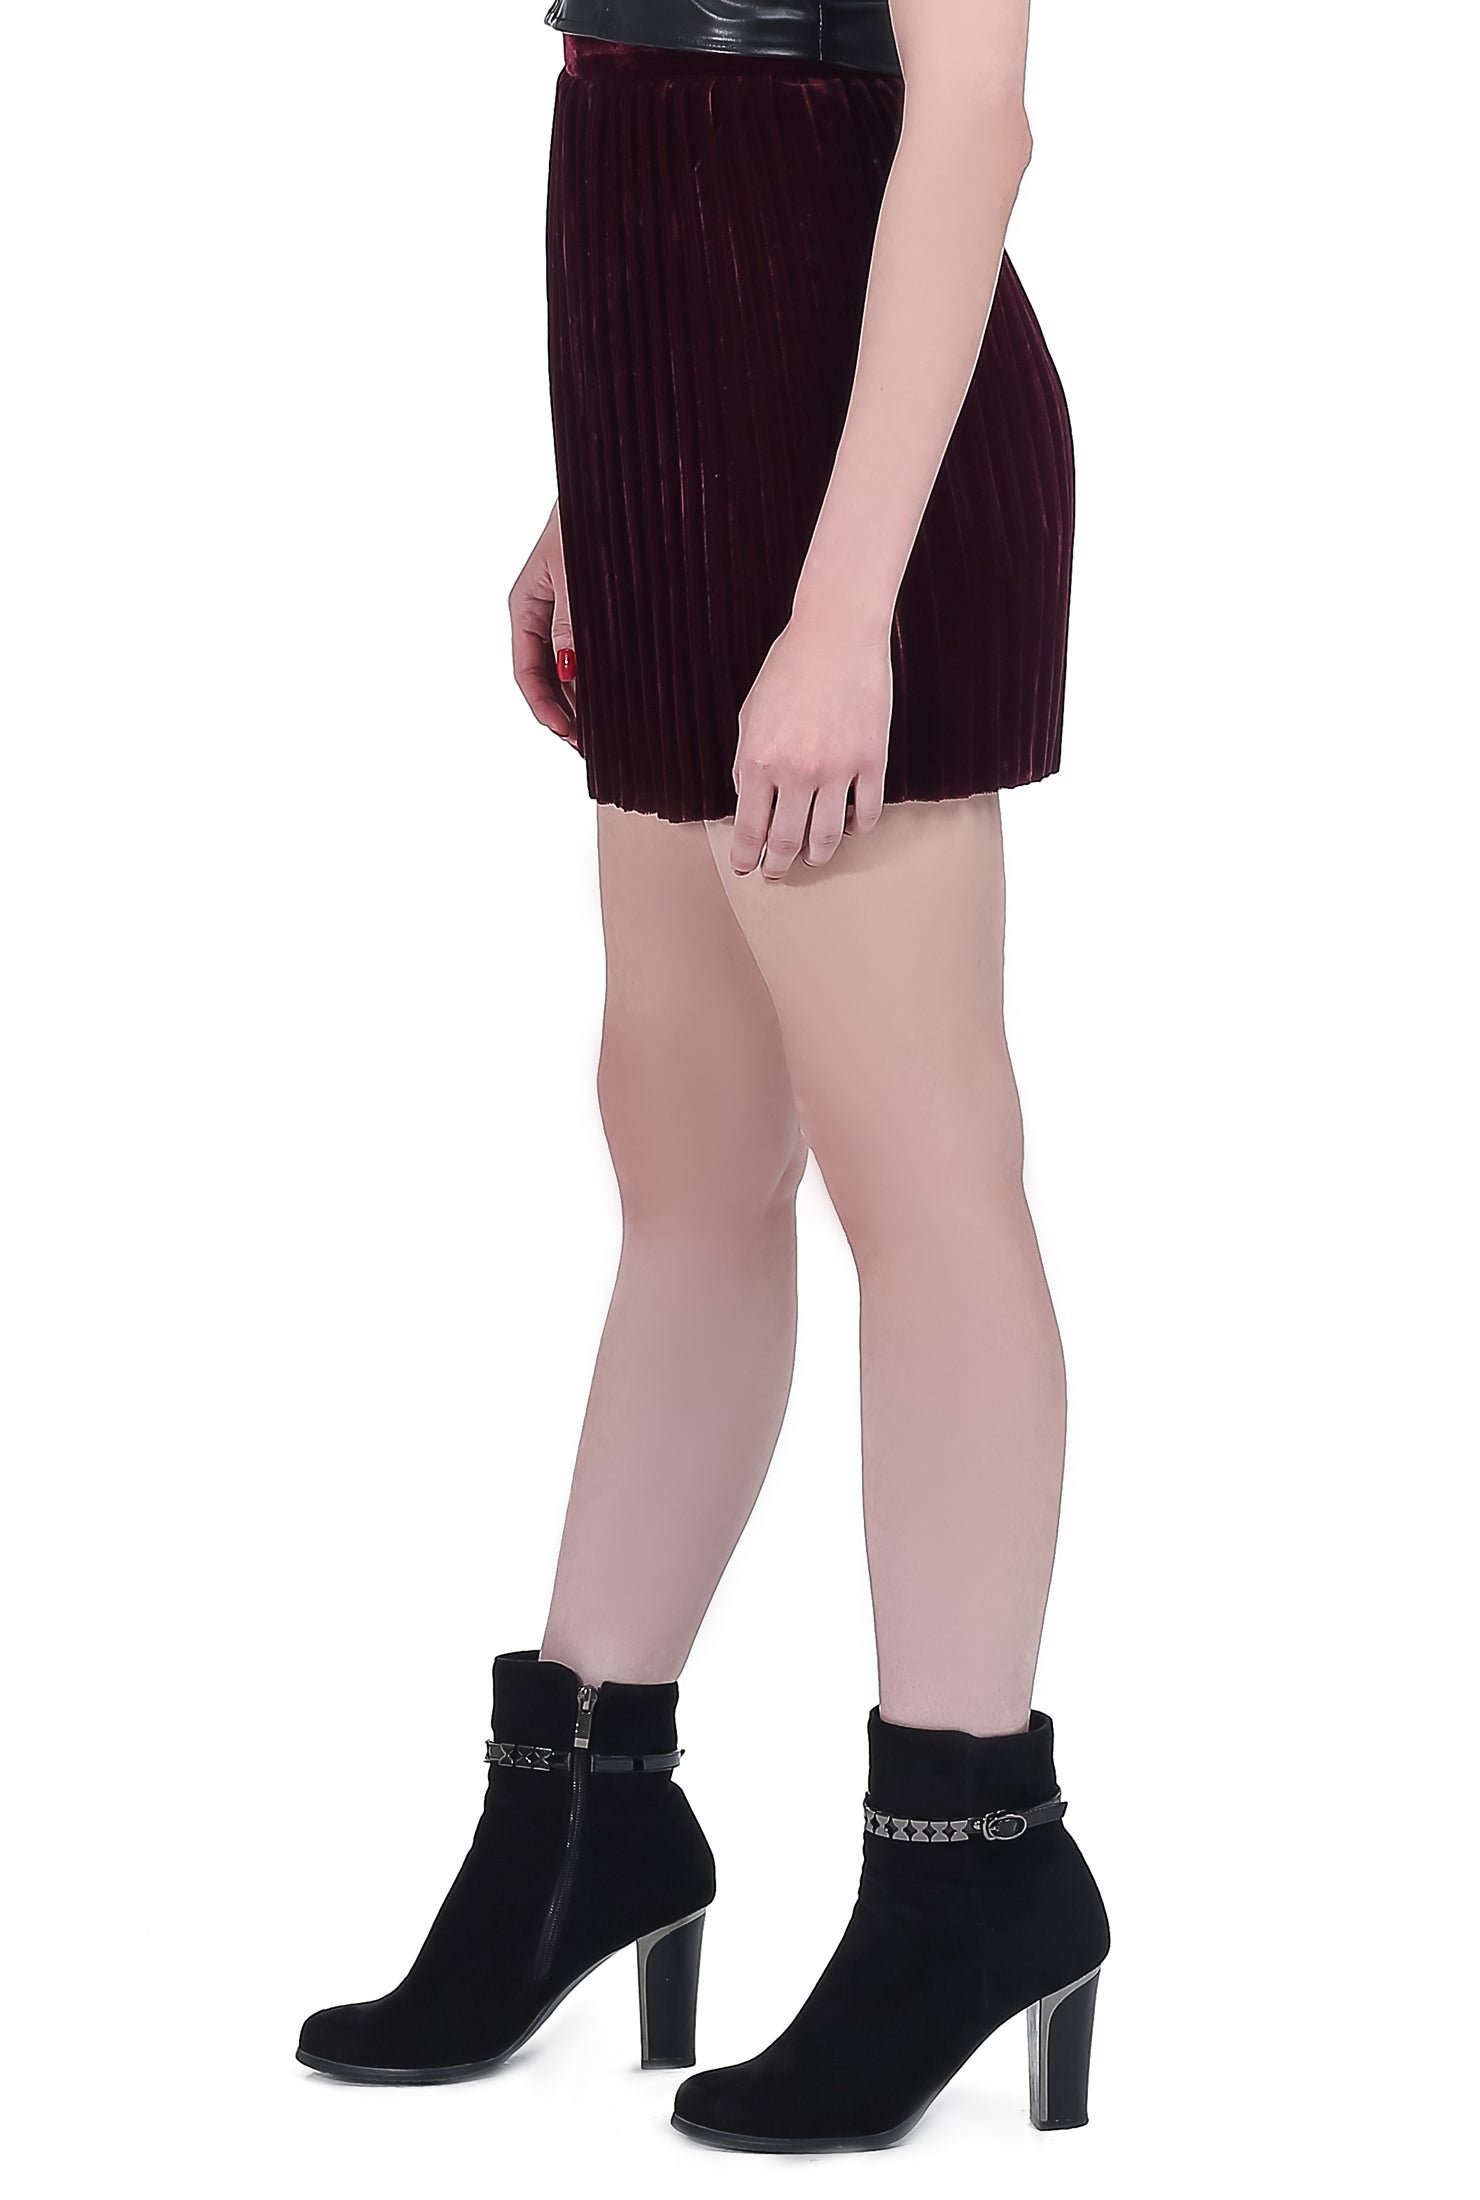 Mini Velvet Pleated Skirt - Maroon